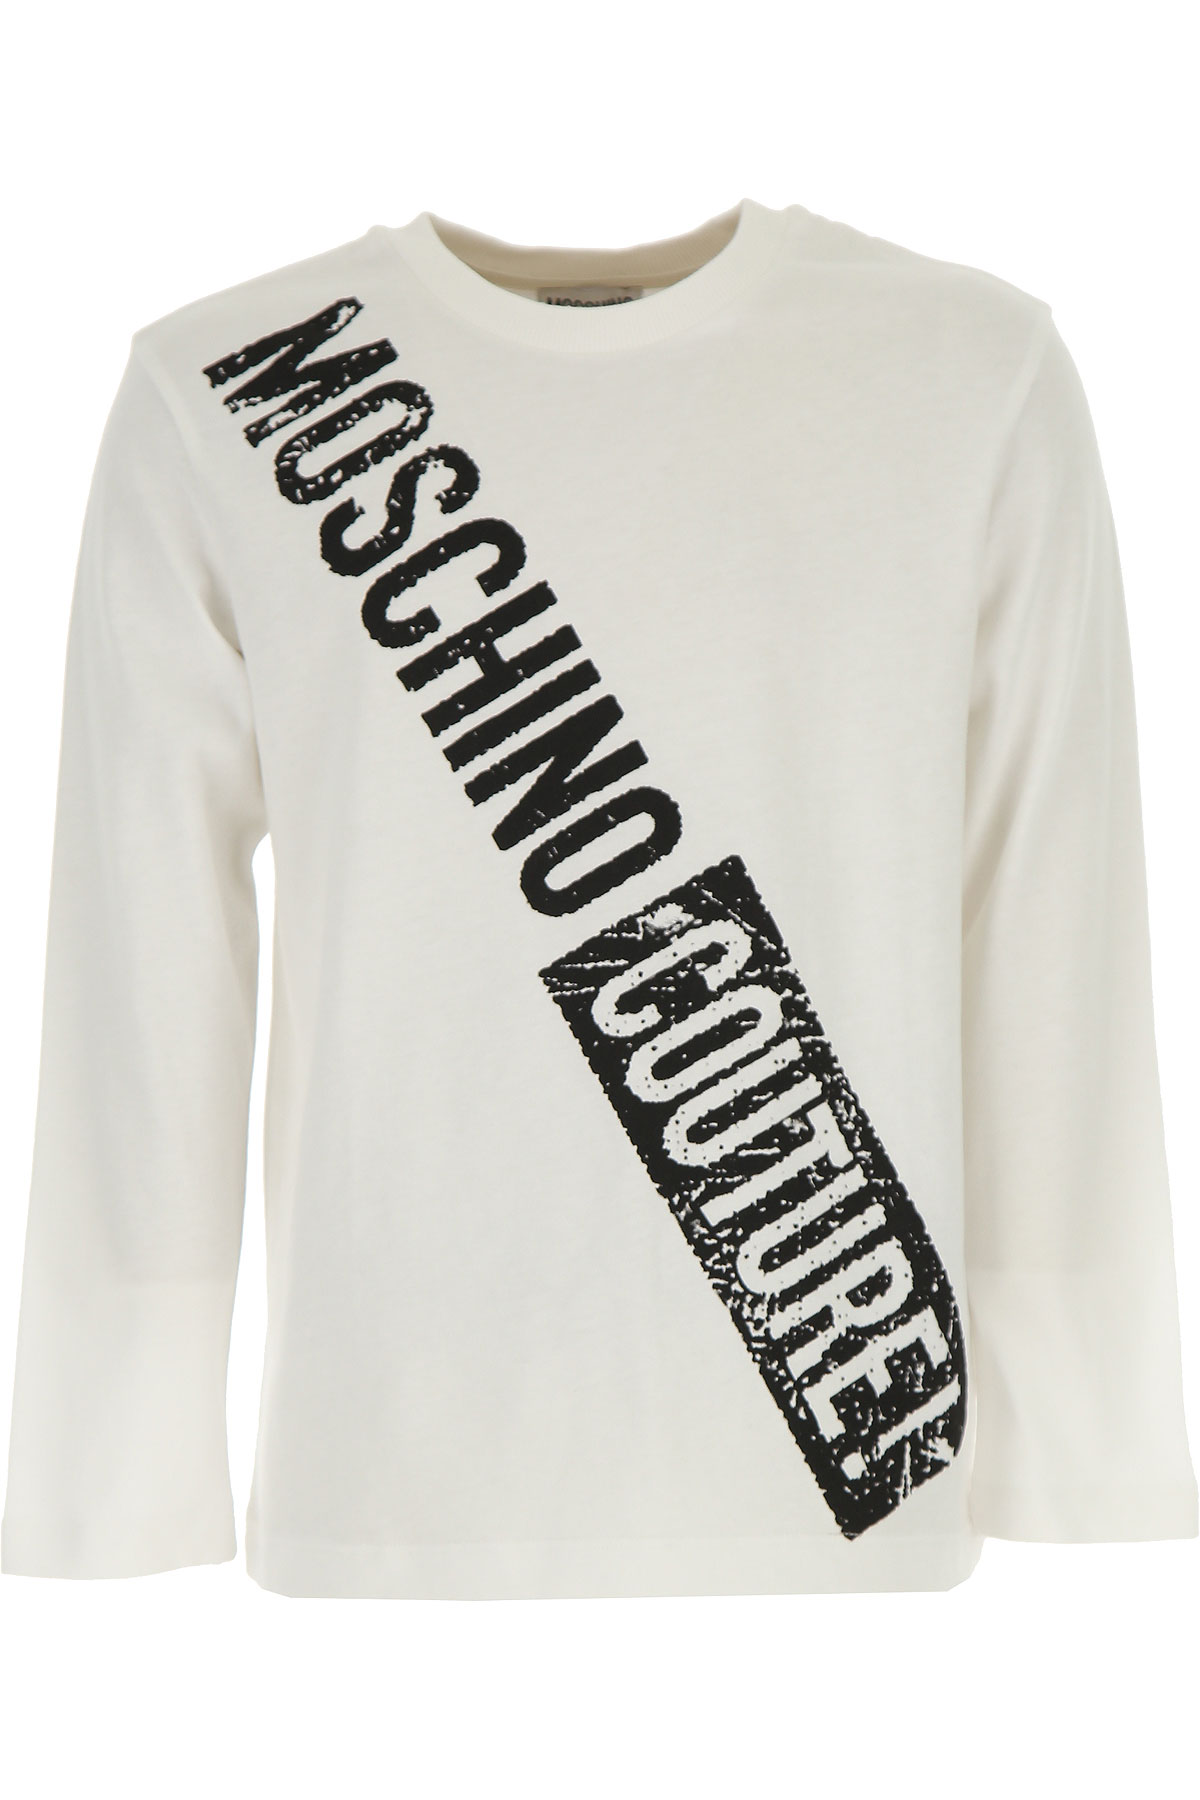 Moschino Kinder T-Shirt für Jungen Günstig im Sale, Weiss, Baumwolle, 2017, 10Y 12Y 14Y 4Y 6Y 8Y